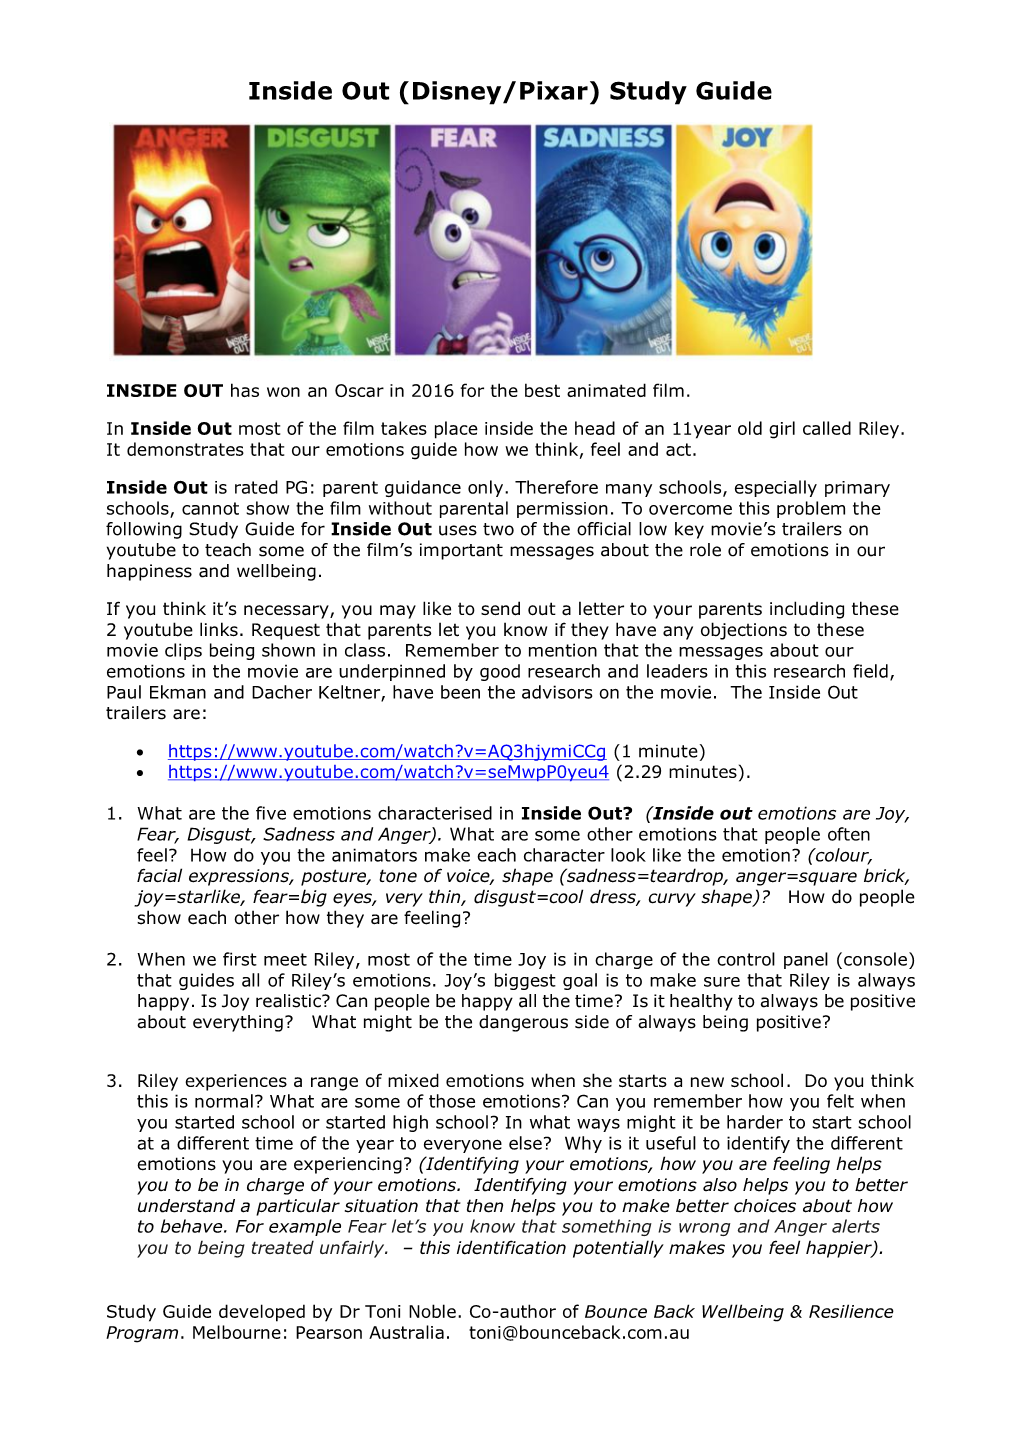 Inside out (Disney/Pixar) Study Guide